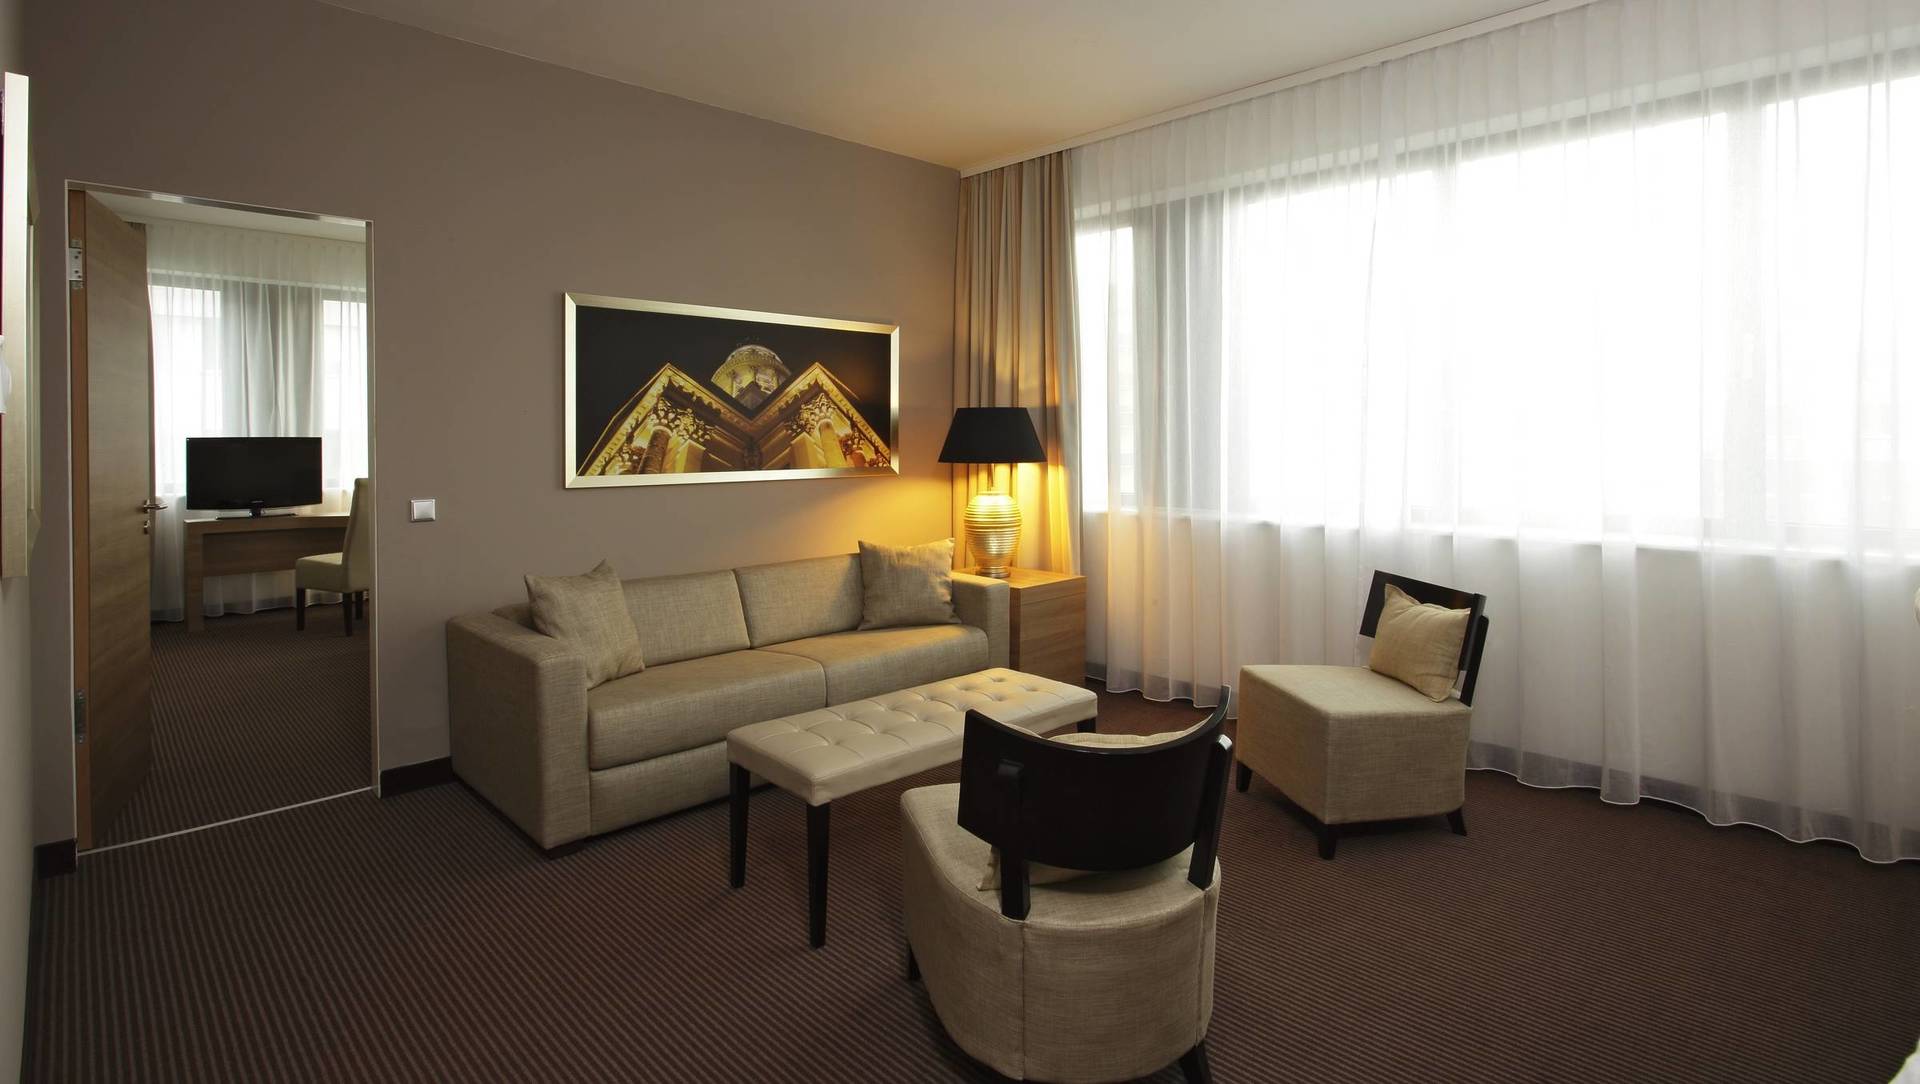 Foglaljon apartmanokat online - H-Hotels.com